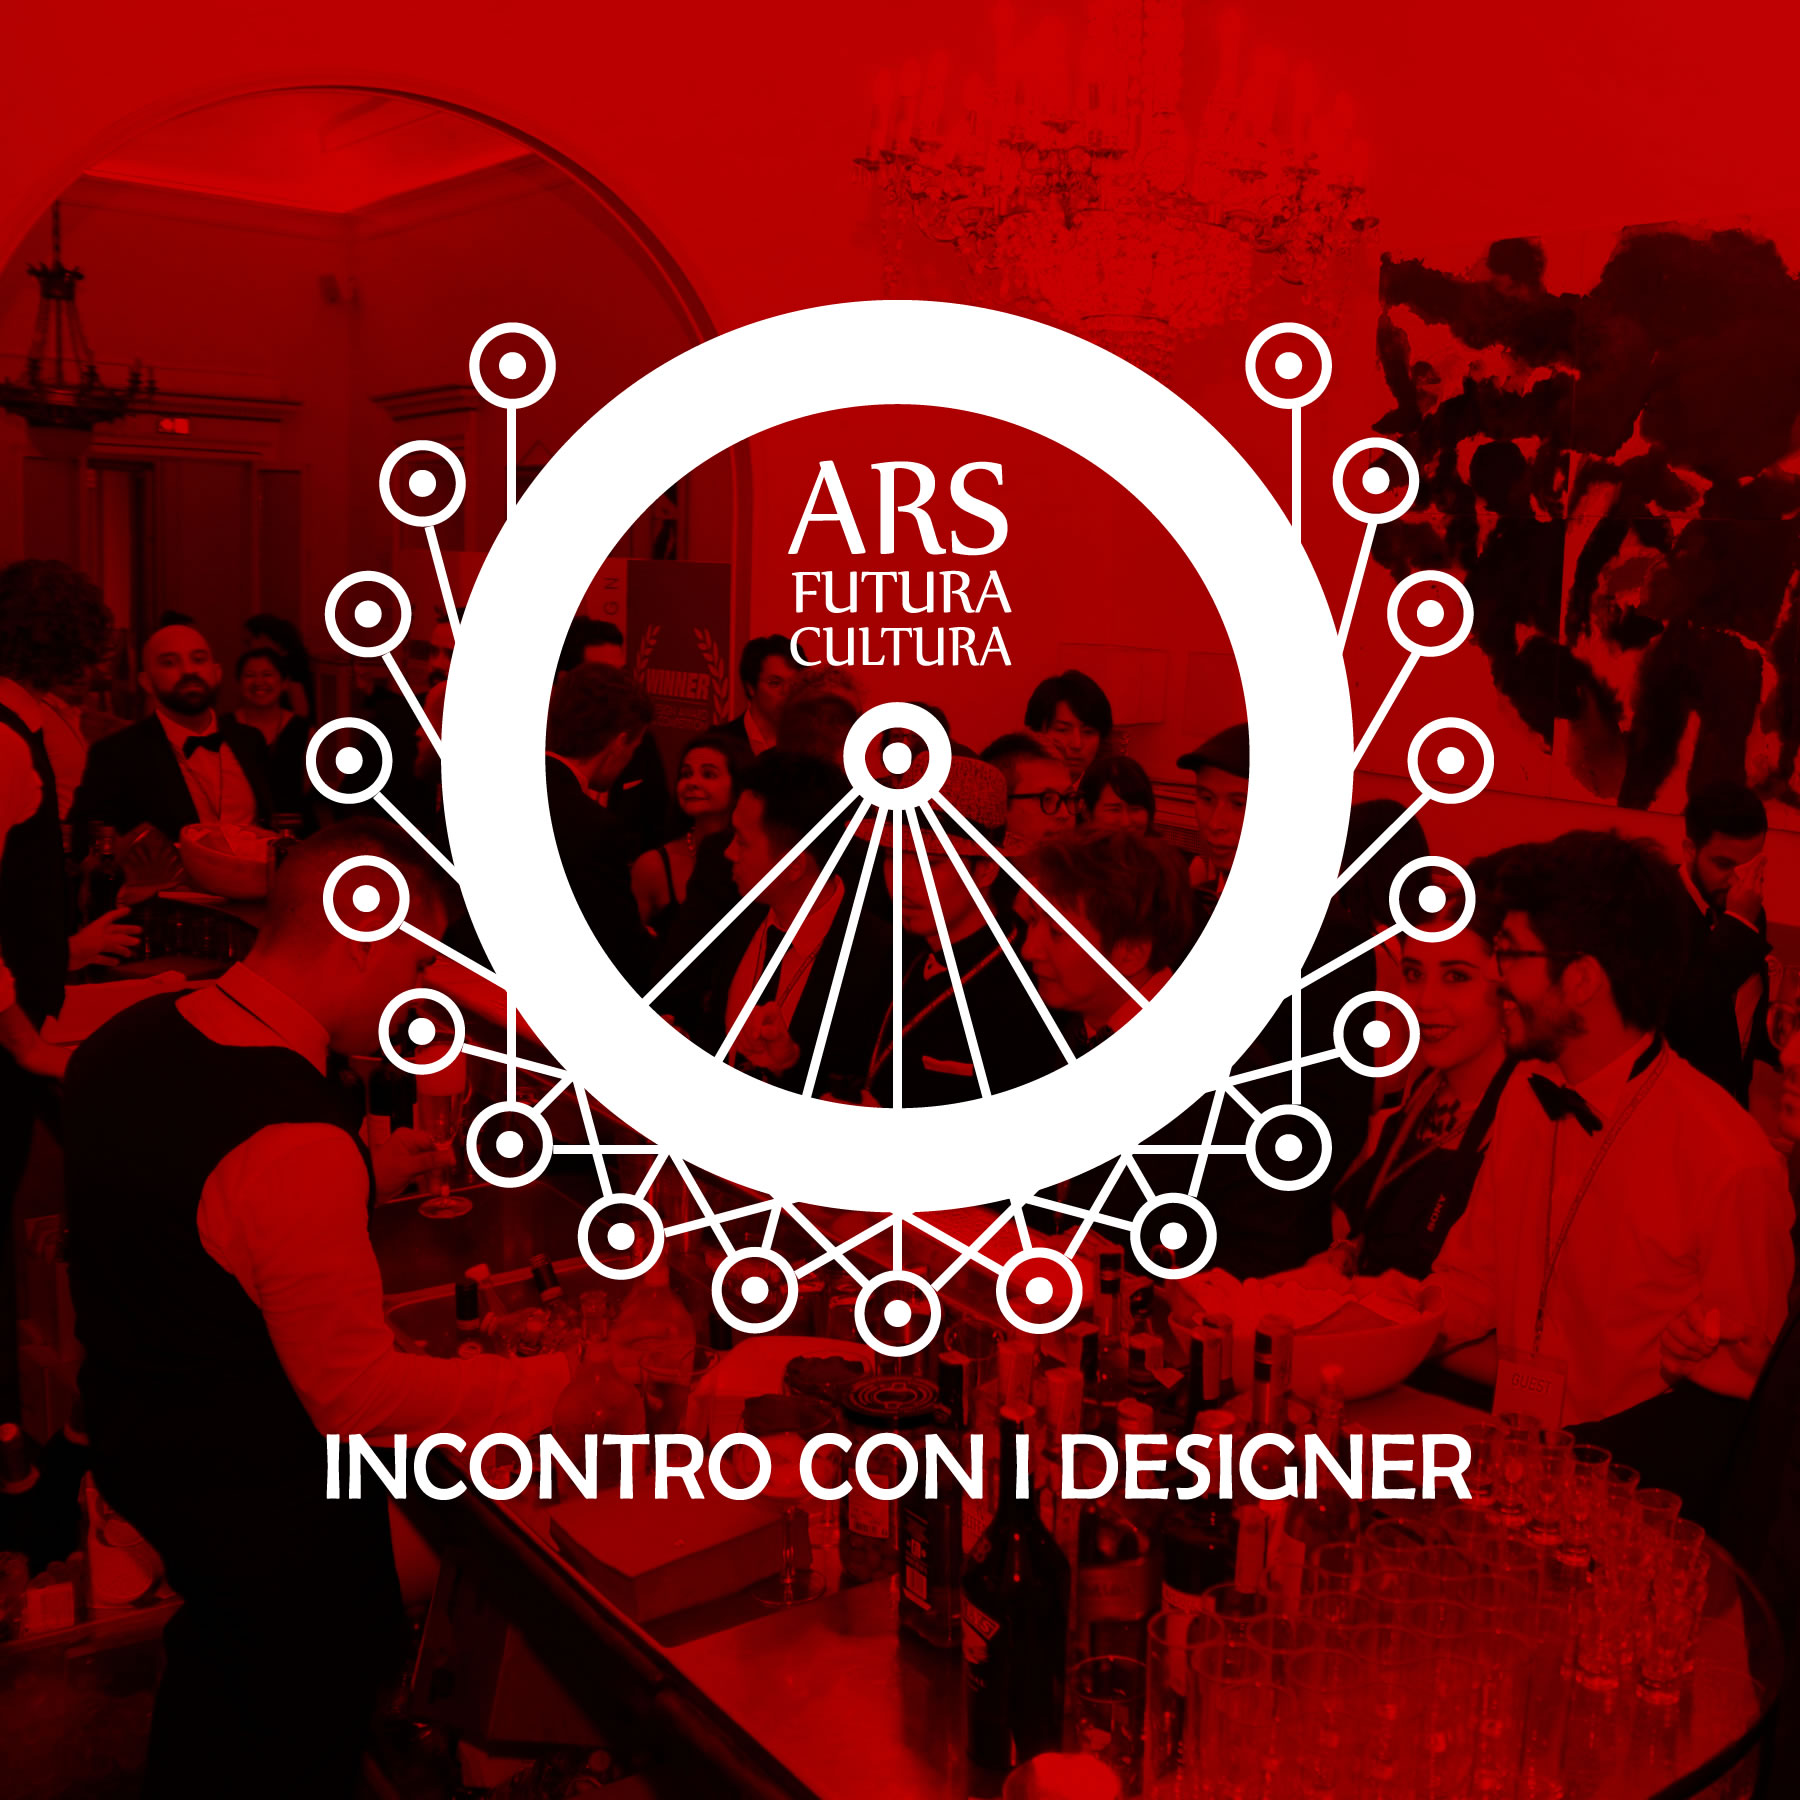 Ars Futura Cultura logo on red background